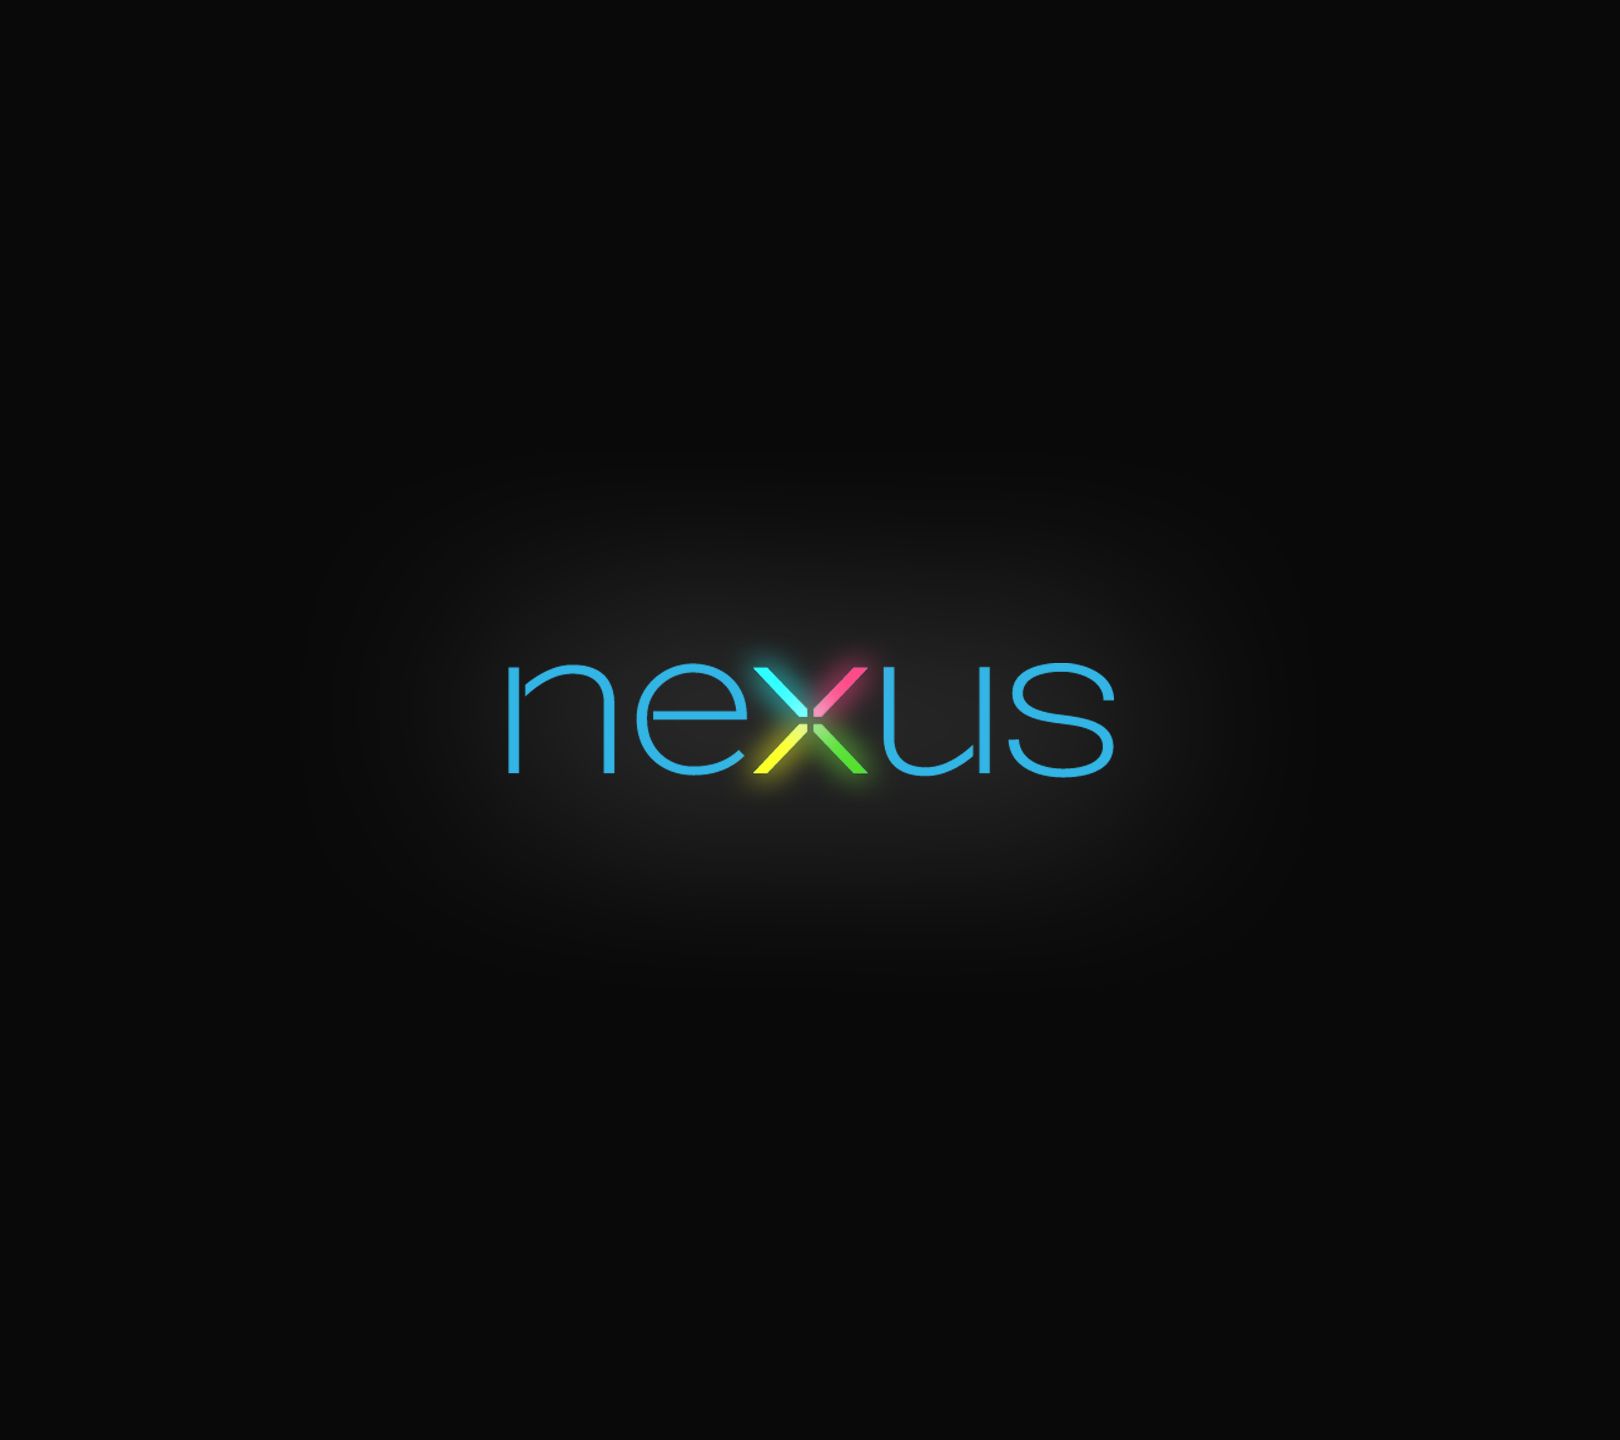 Nexus Android HD Wallpaper Desktop Wallpaper ForWallpapers.com